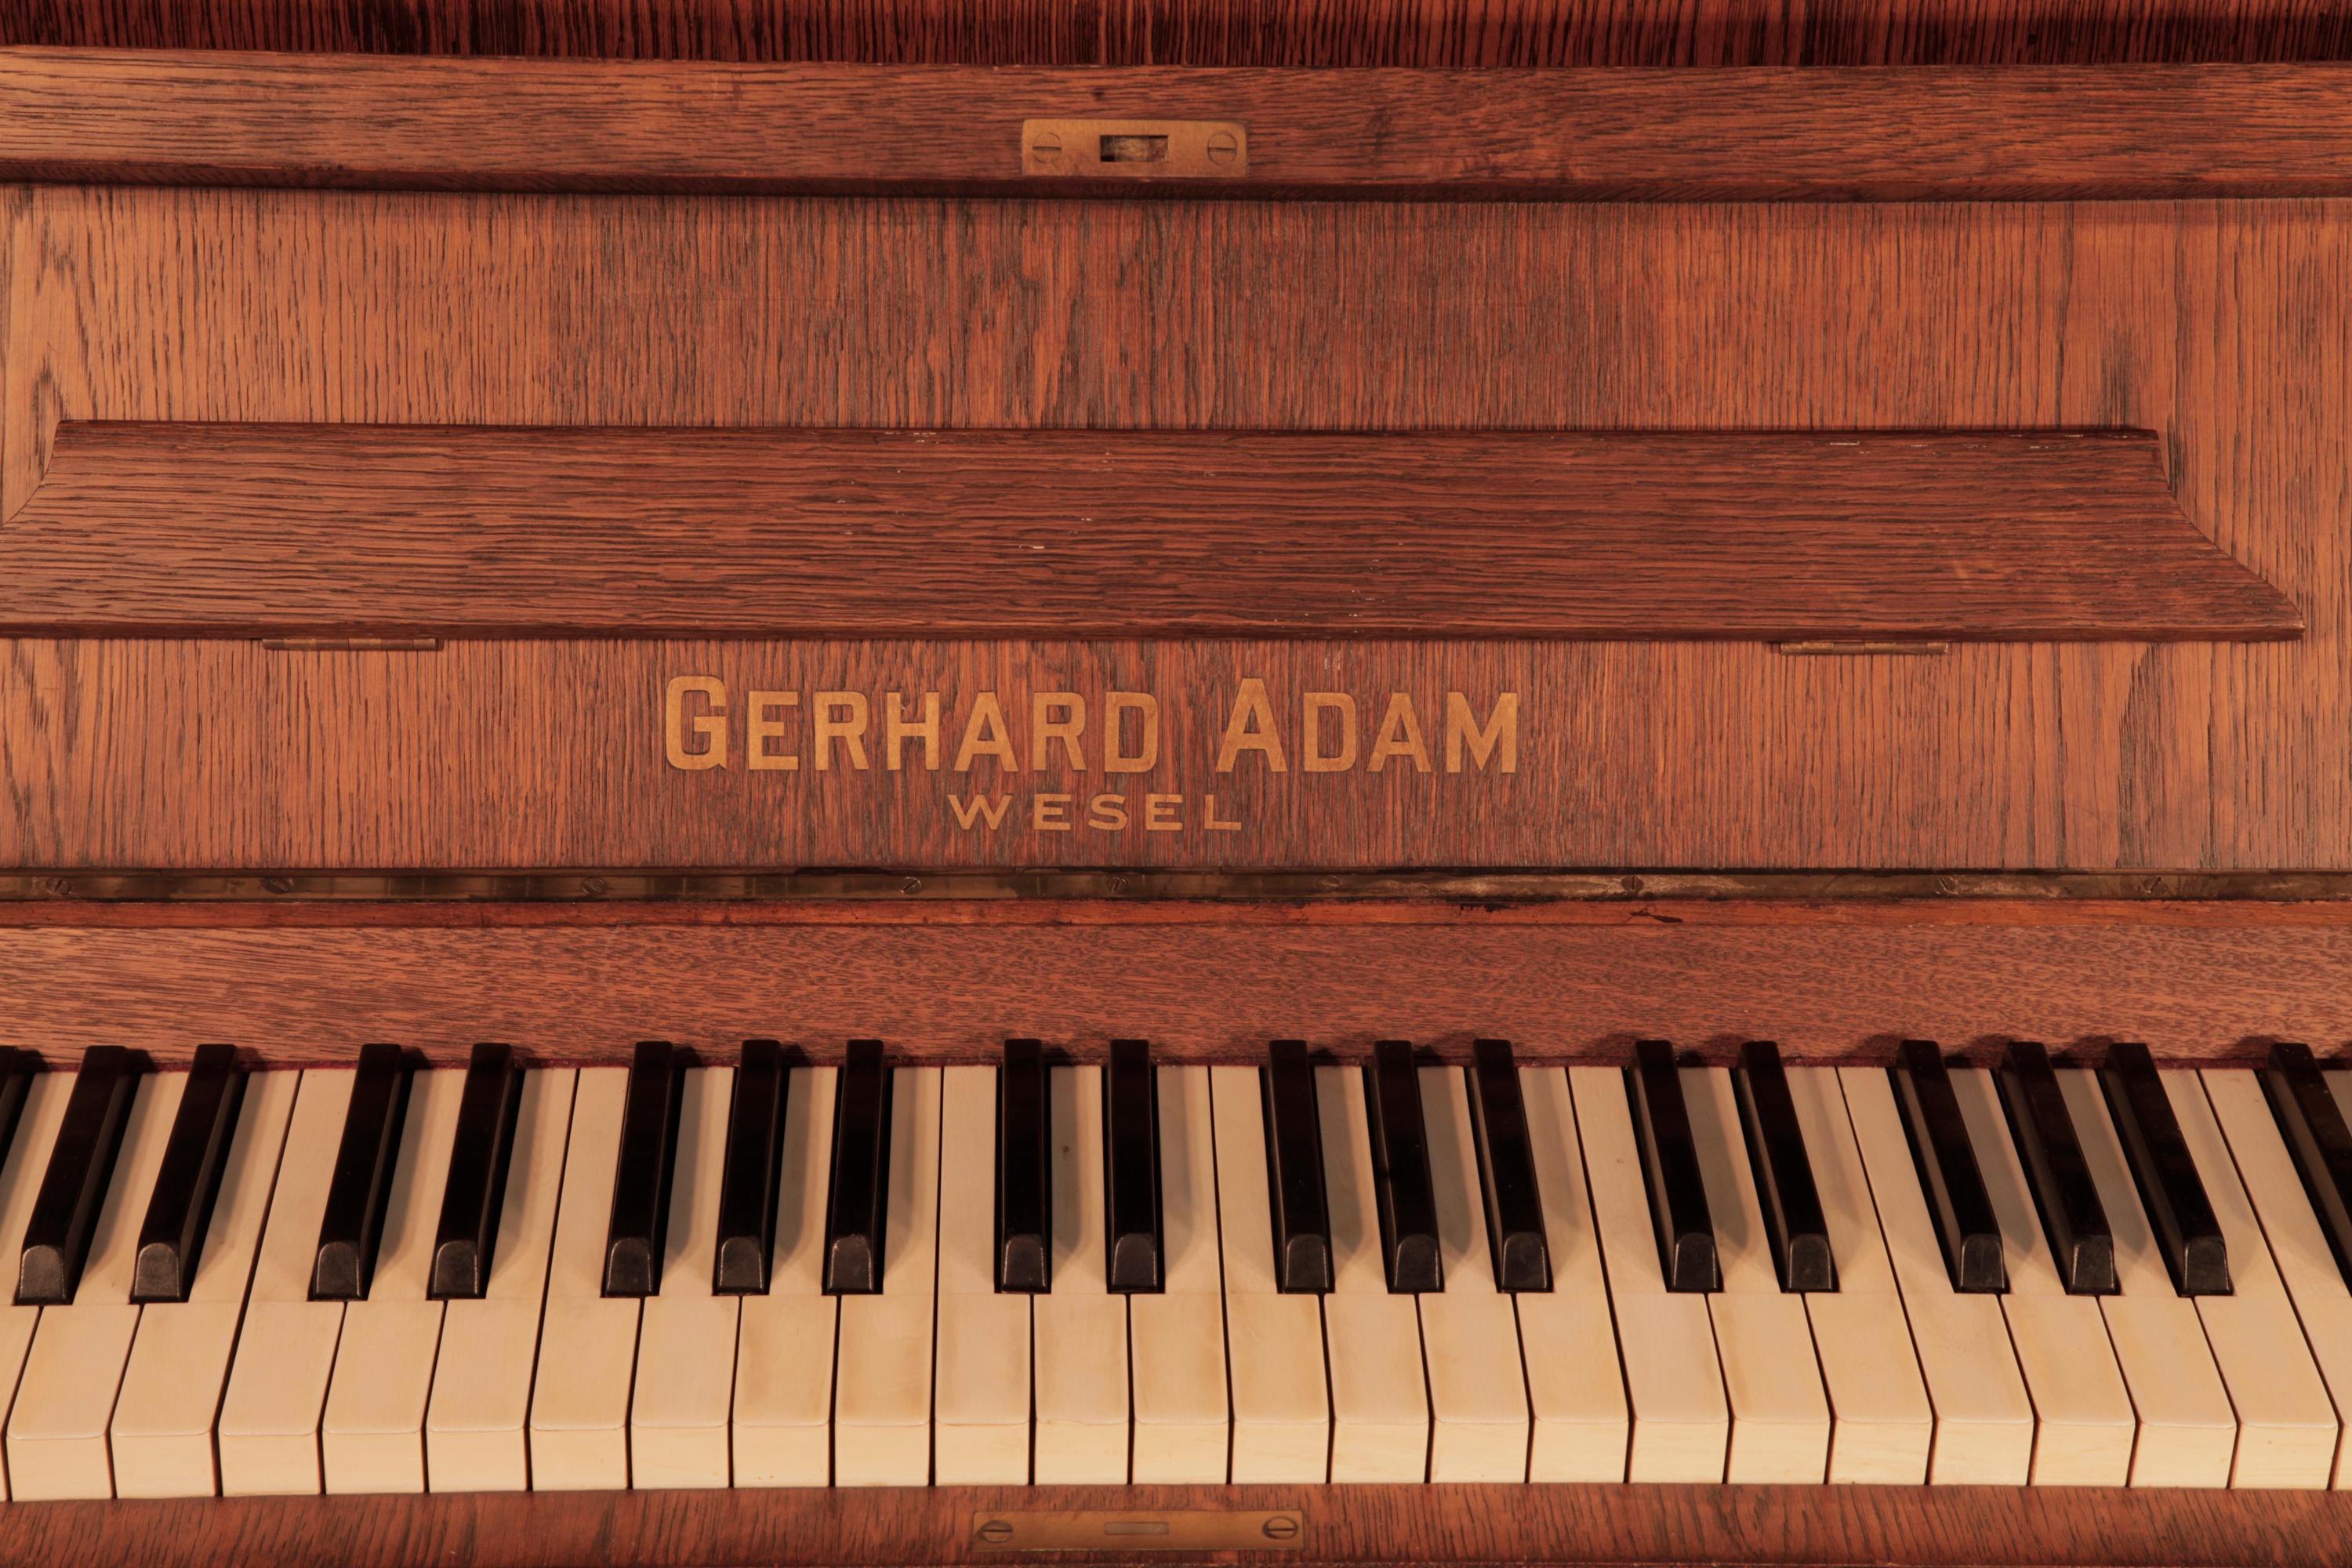 German Gerhard Adams Upright Piano Oak Brutalist Style Aggressive Lines Modular Planes